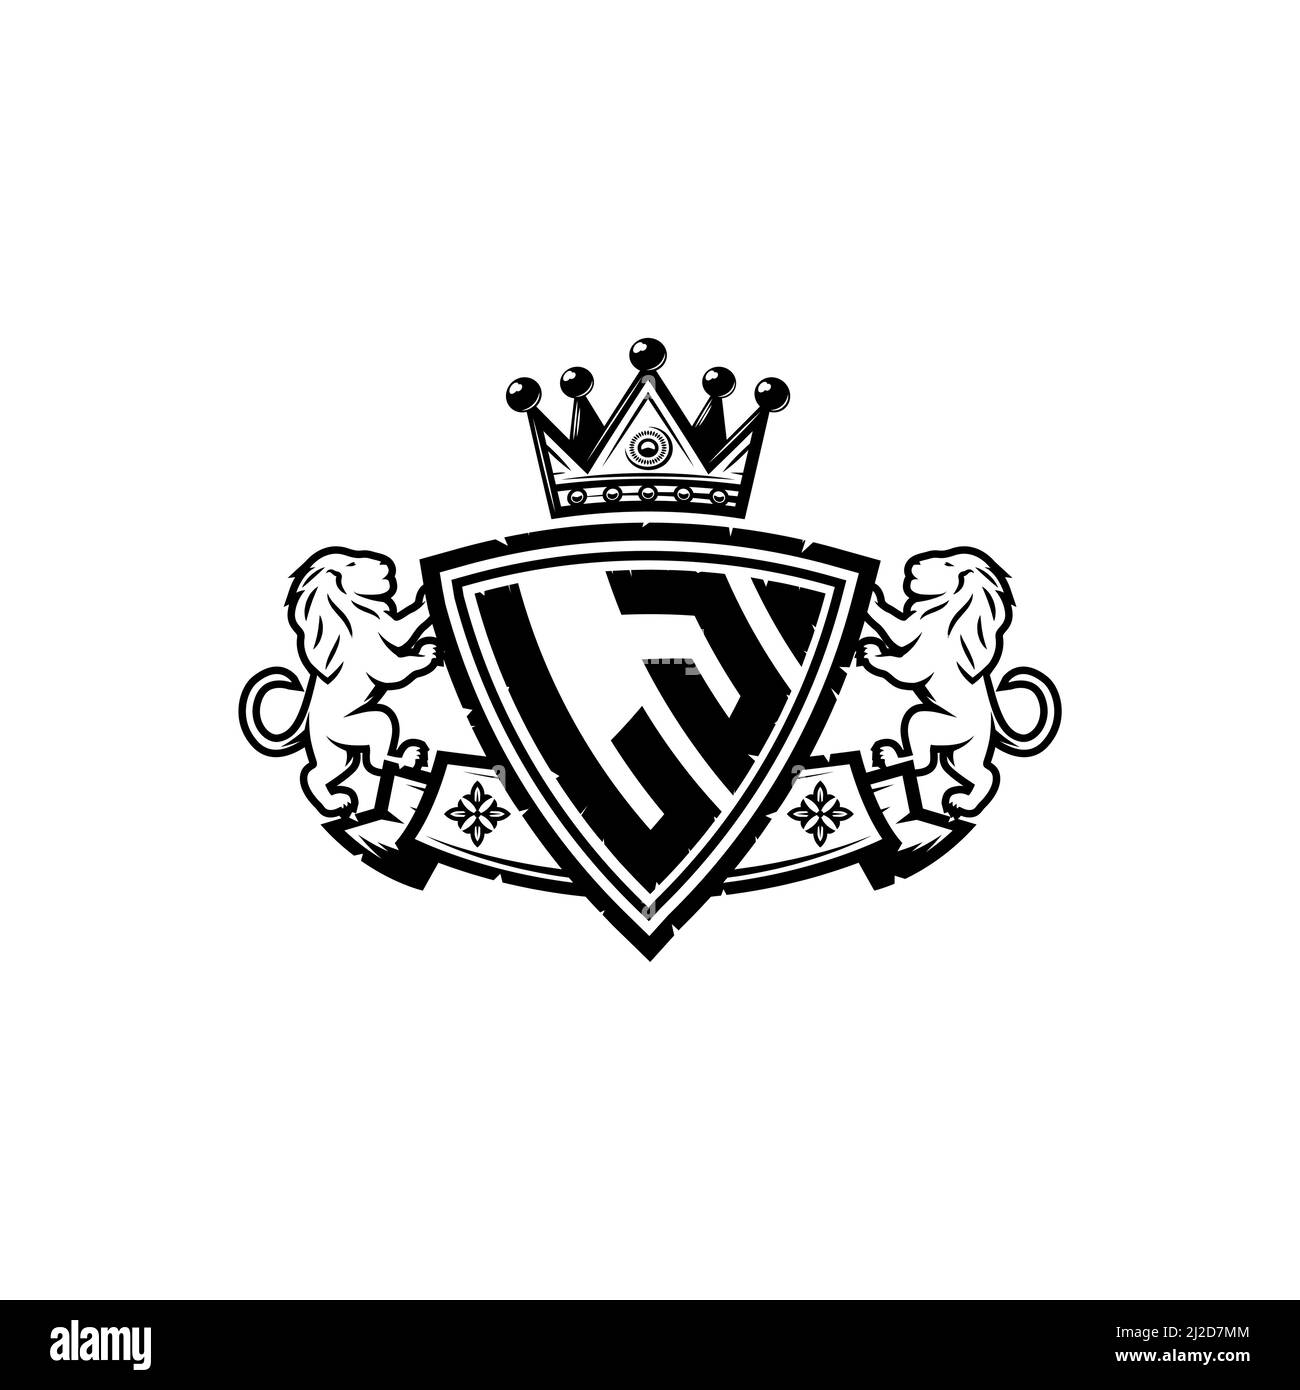 LJ Monogram logo letter with Simple shield crown style design ...